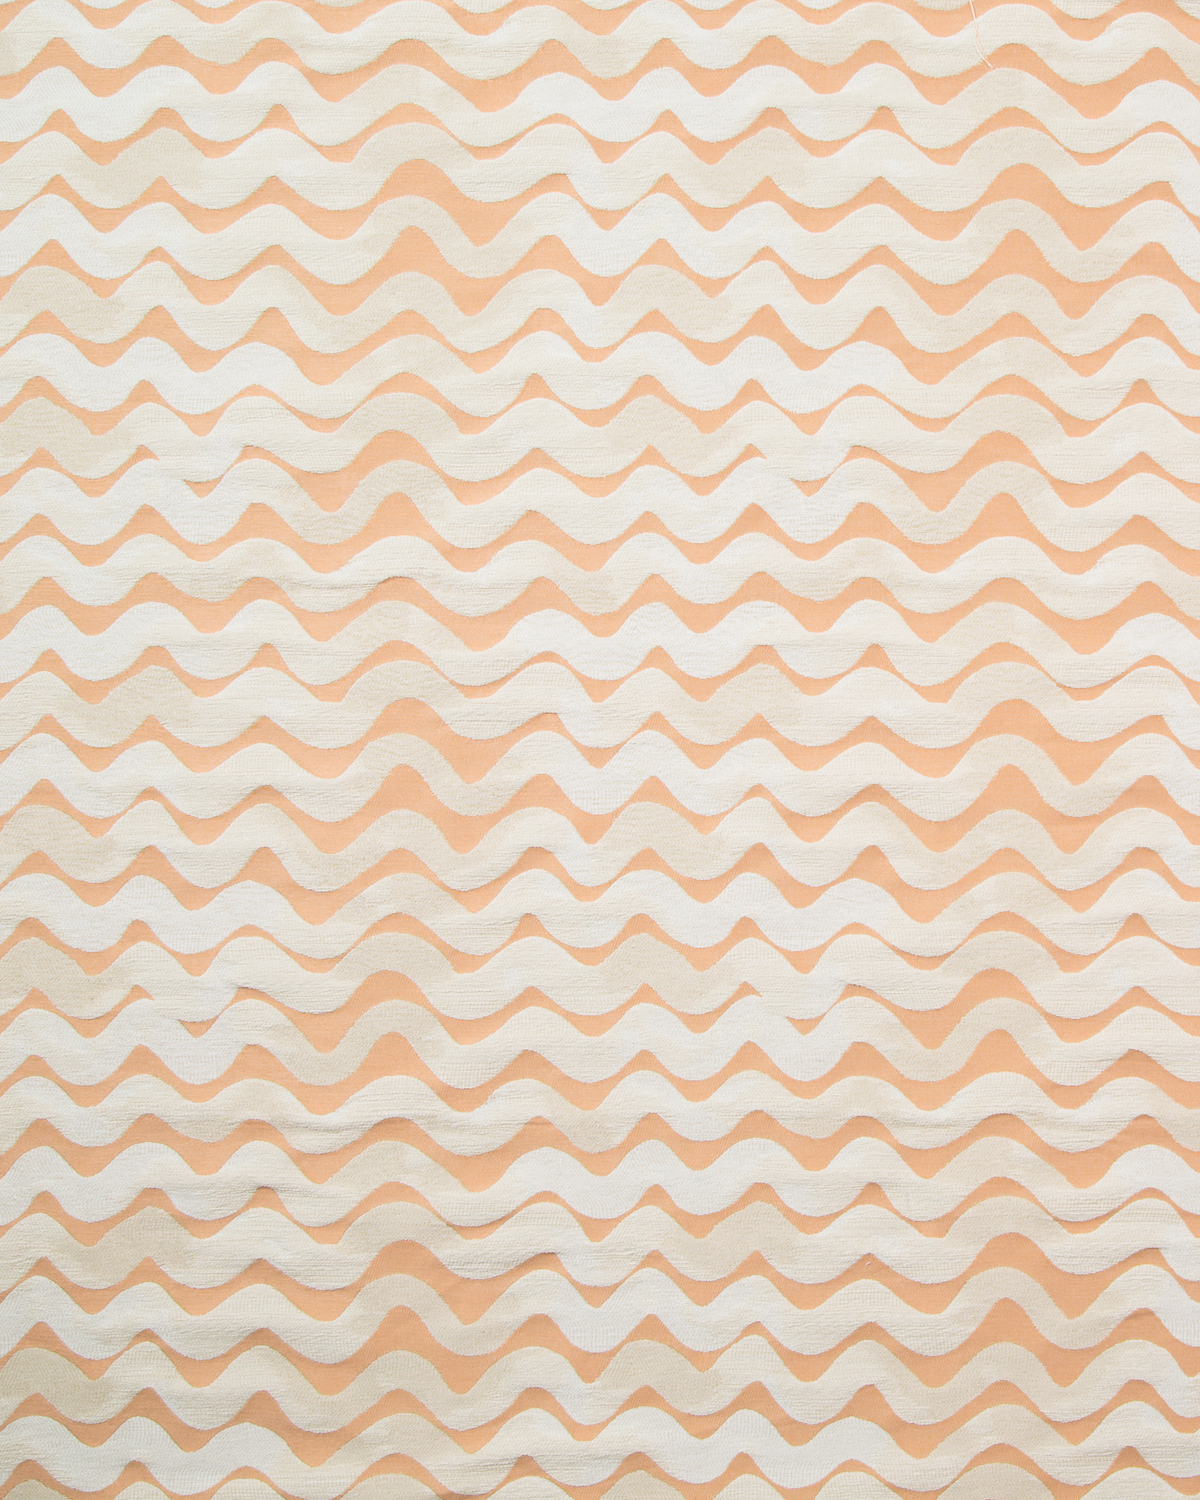 Tidal Wave Fabric in Peach